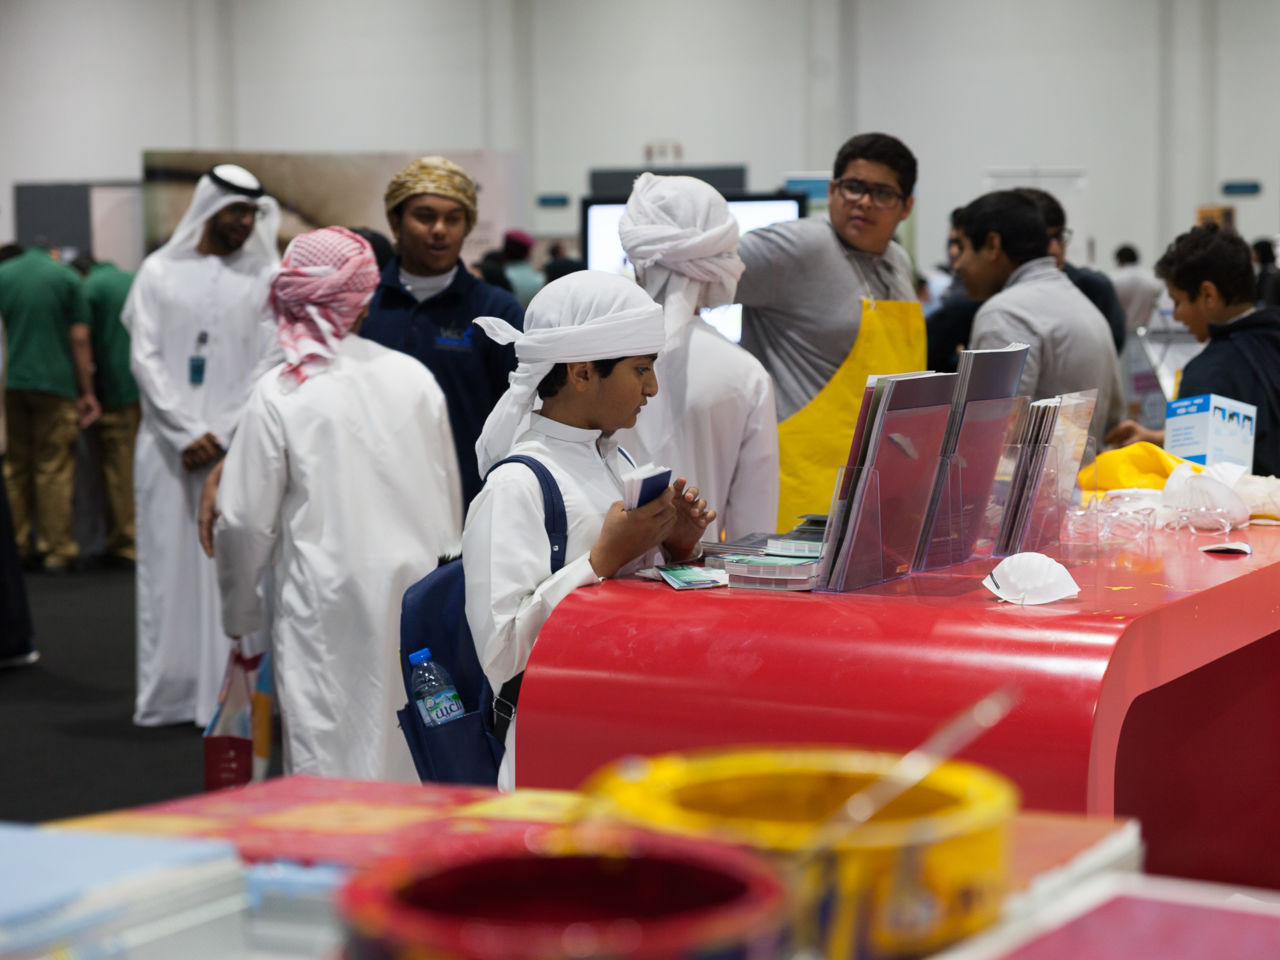 Emirati teenagers introduced to WorldSkills Abu Dhabi 2017 at EmiratesSkills national competition